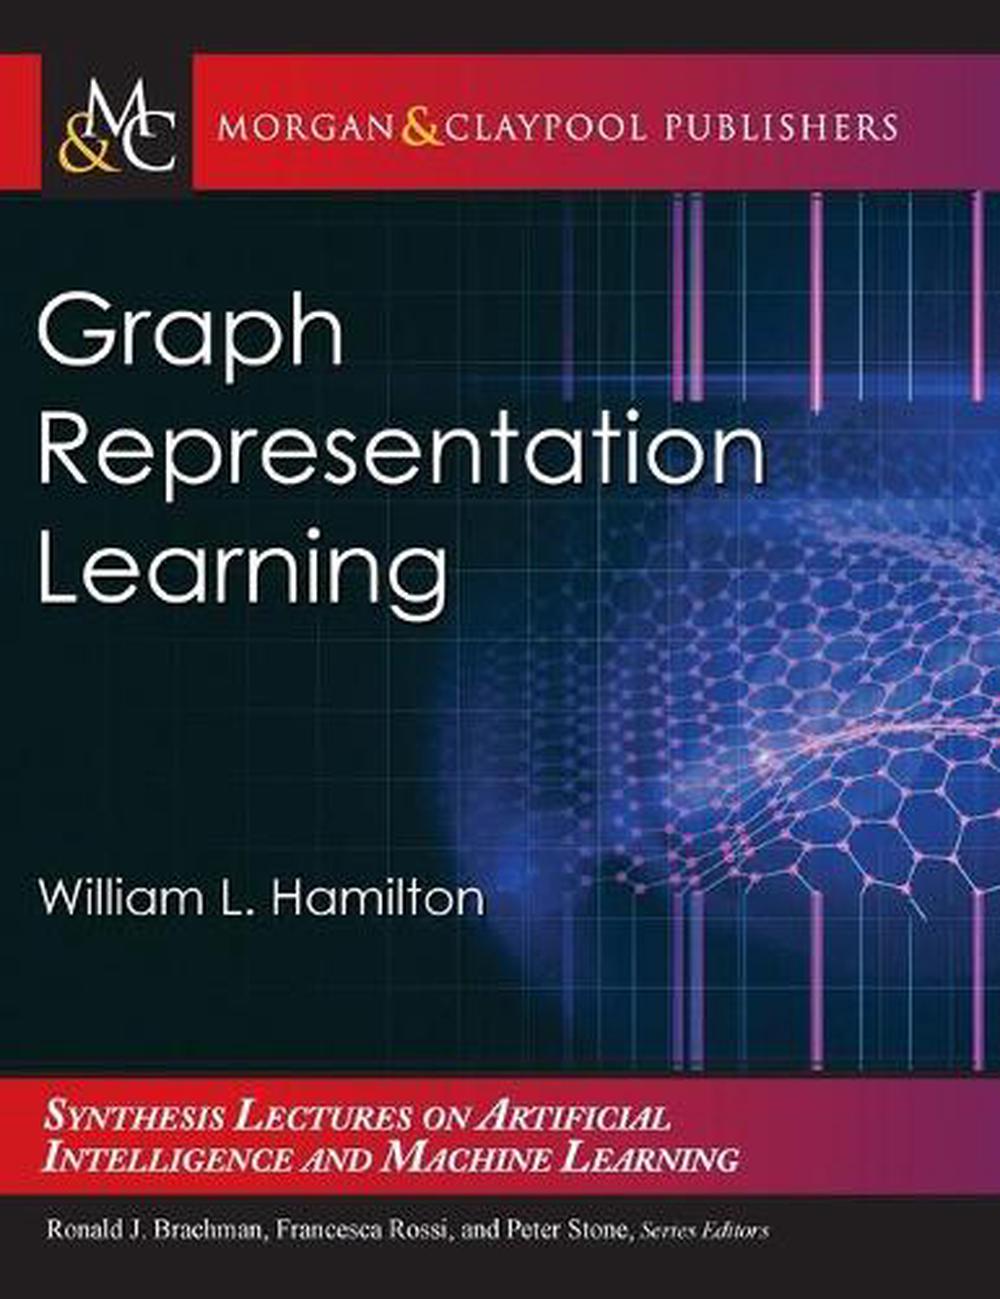 graph representation learning by william l. hamilton